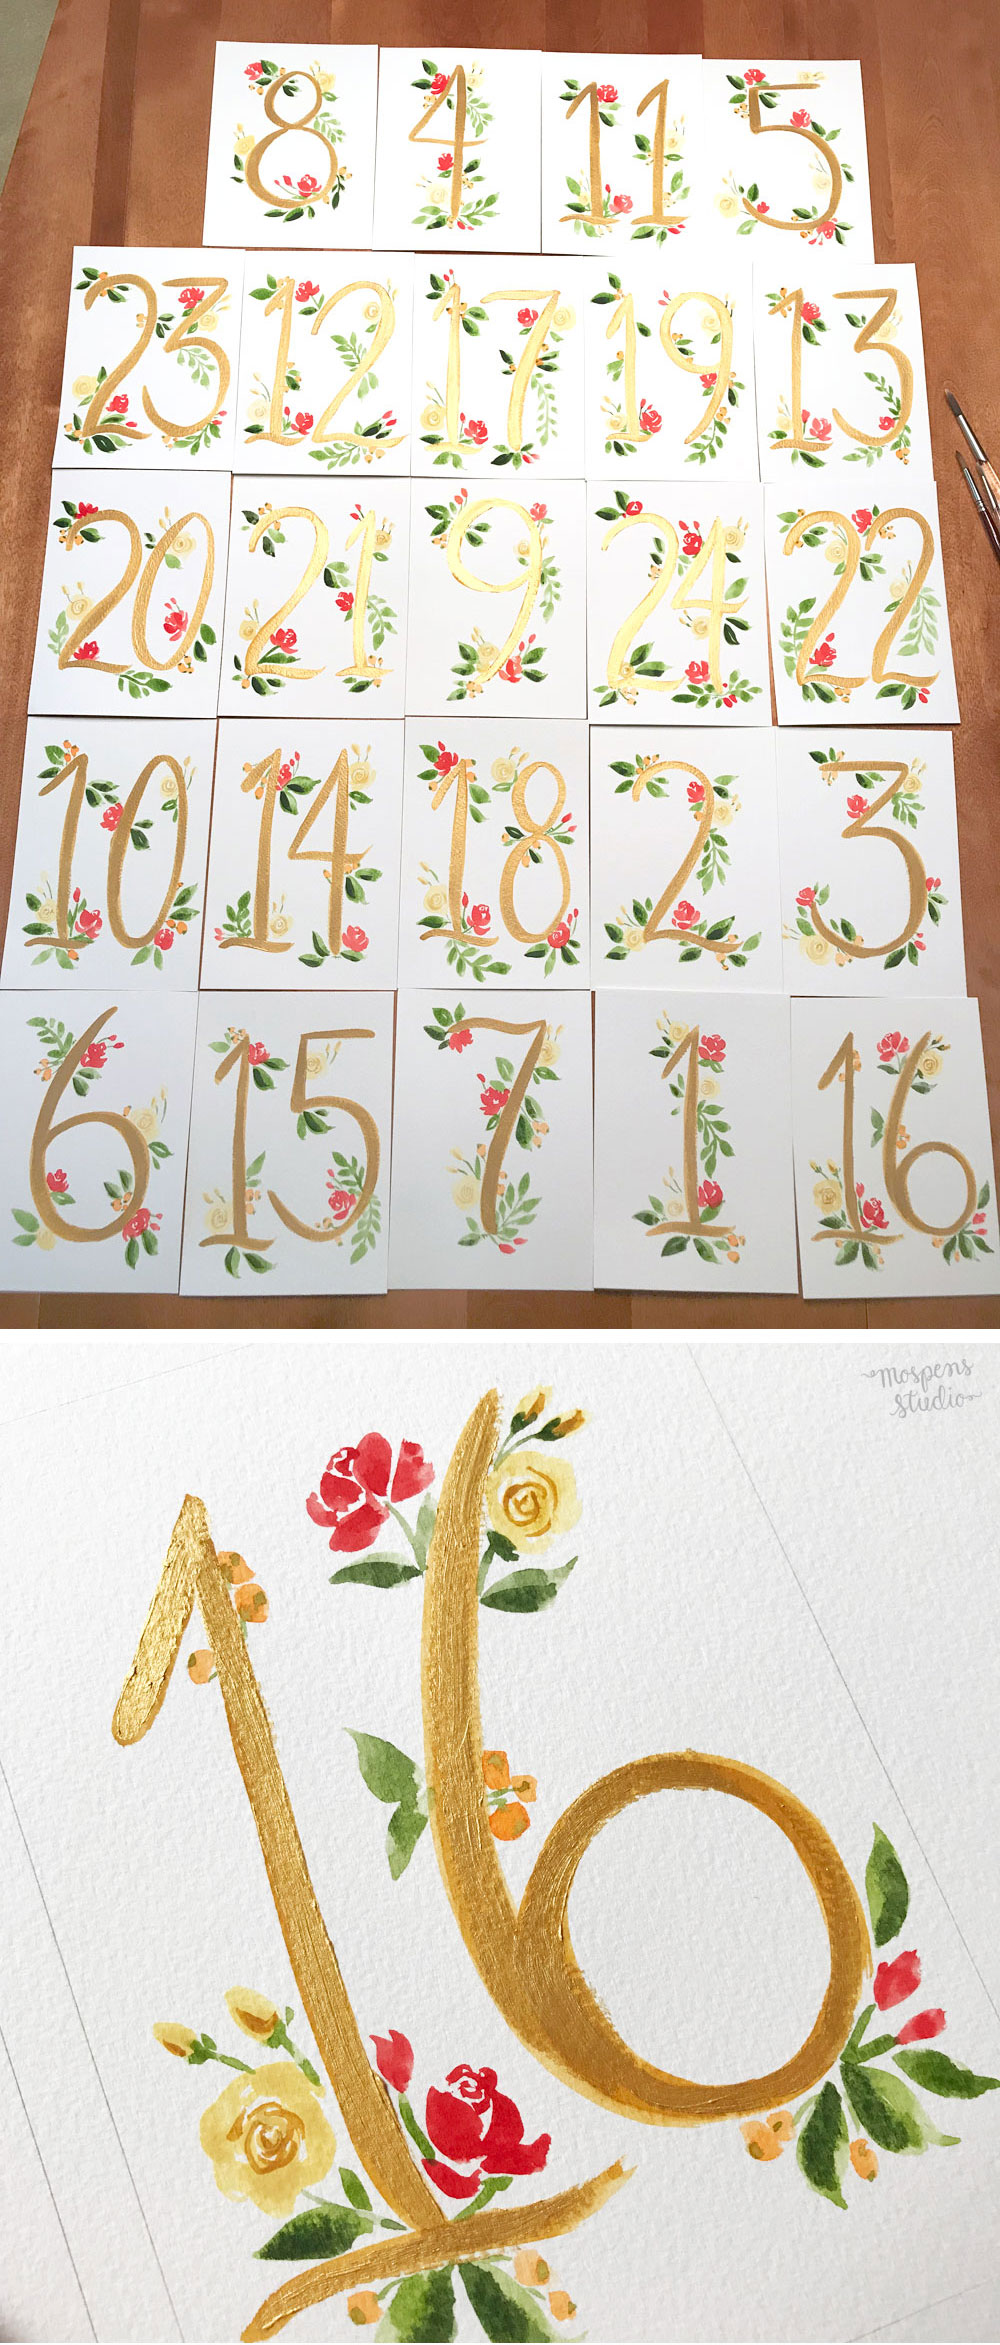 Hand painted table numbers for a New York Wedding by Michelle Mospens. Mospens Studio #weddingideas #tablecards #goldwedding #fairytalewedding